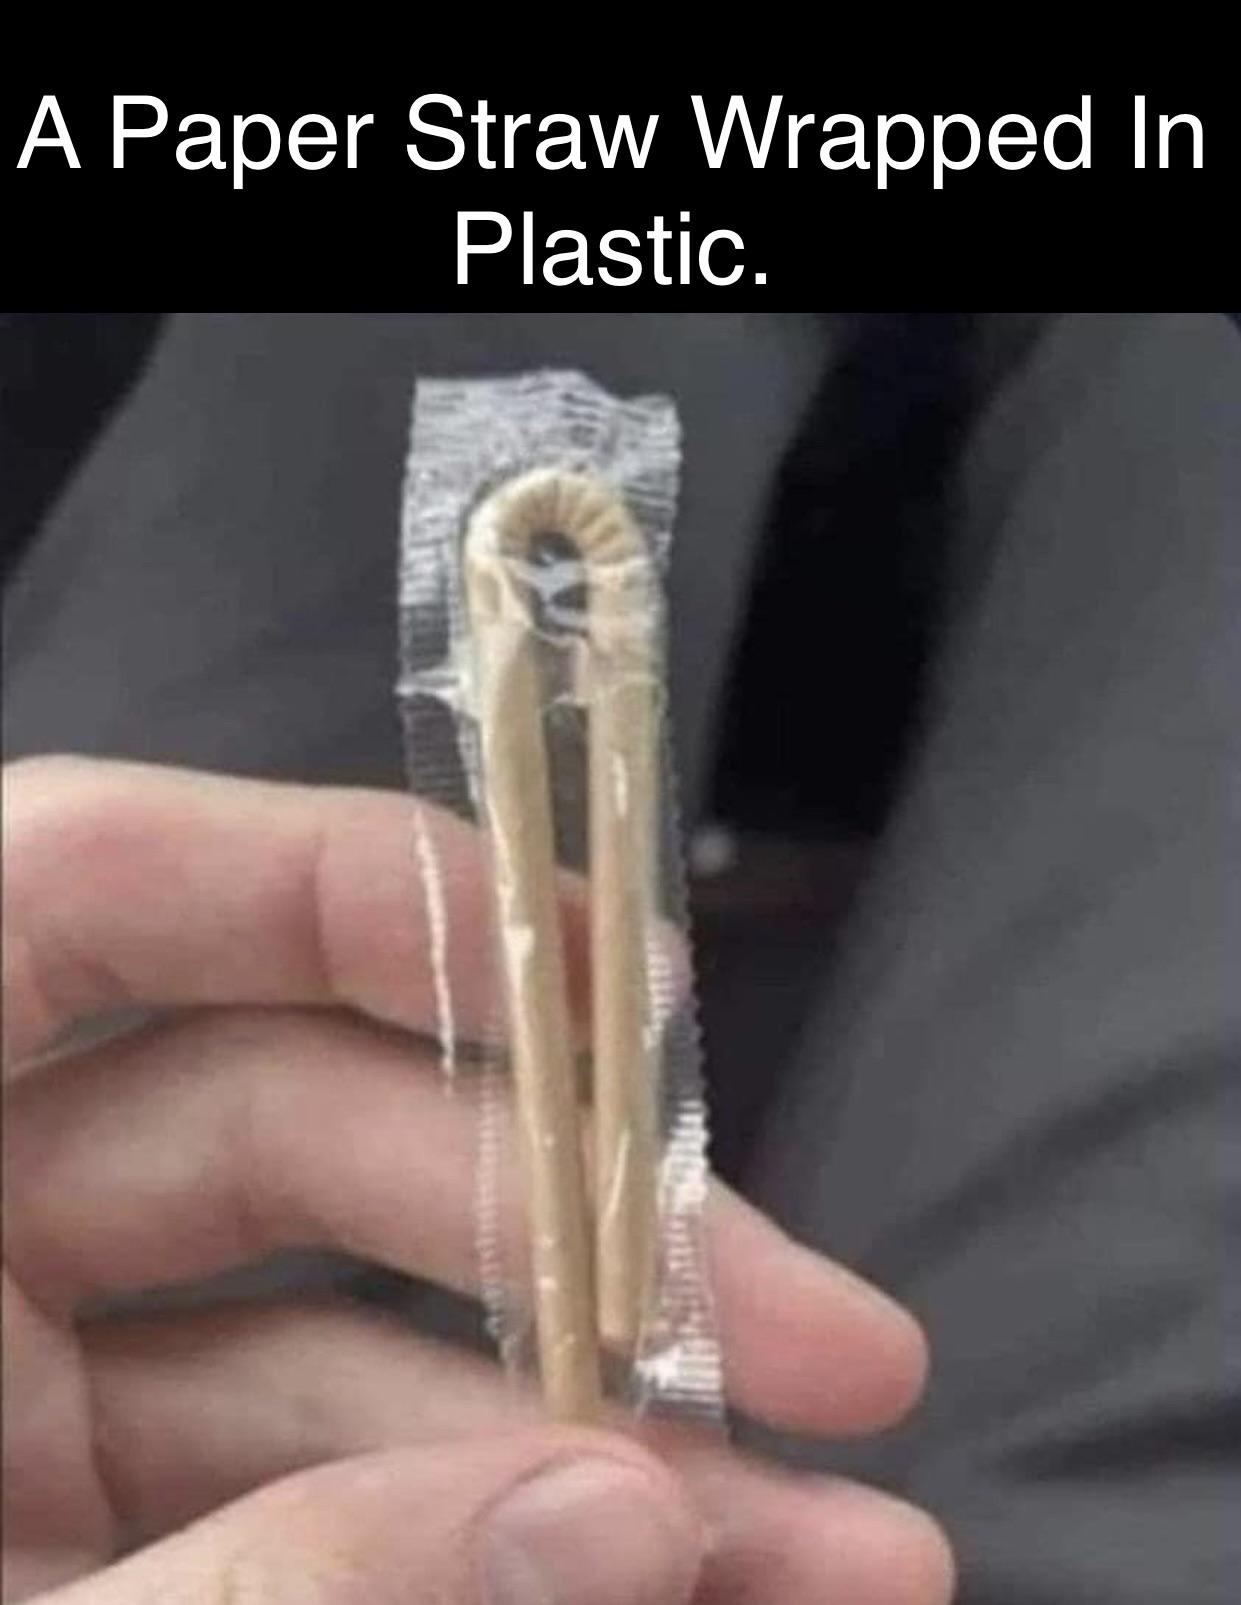 dank memes - funny memes - paper straw in a plastic wrap - A Paper Straw Wrapped In Plastic.